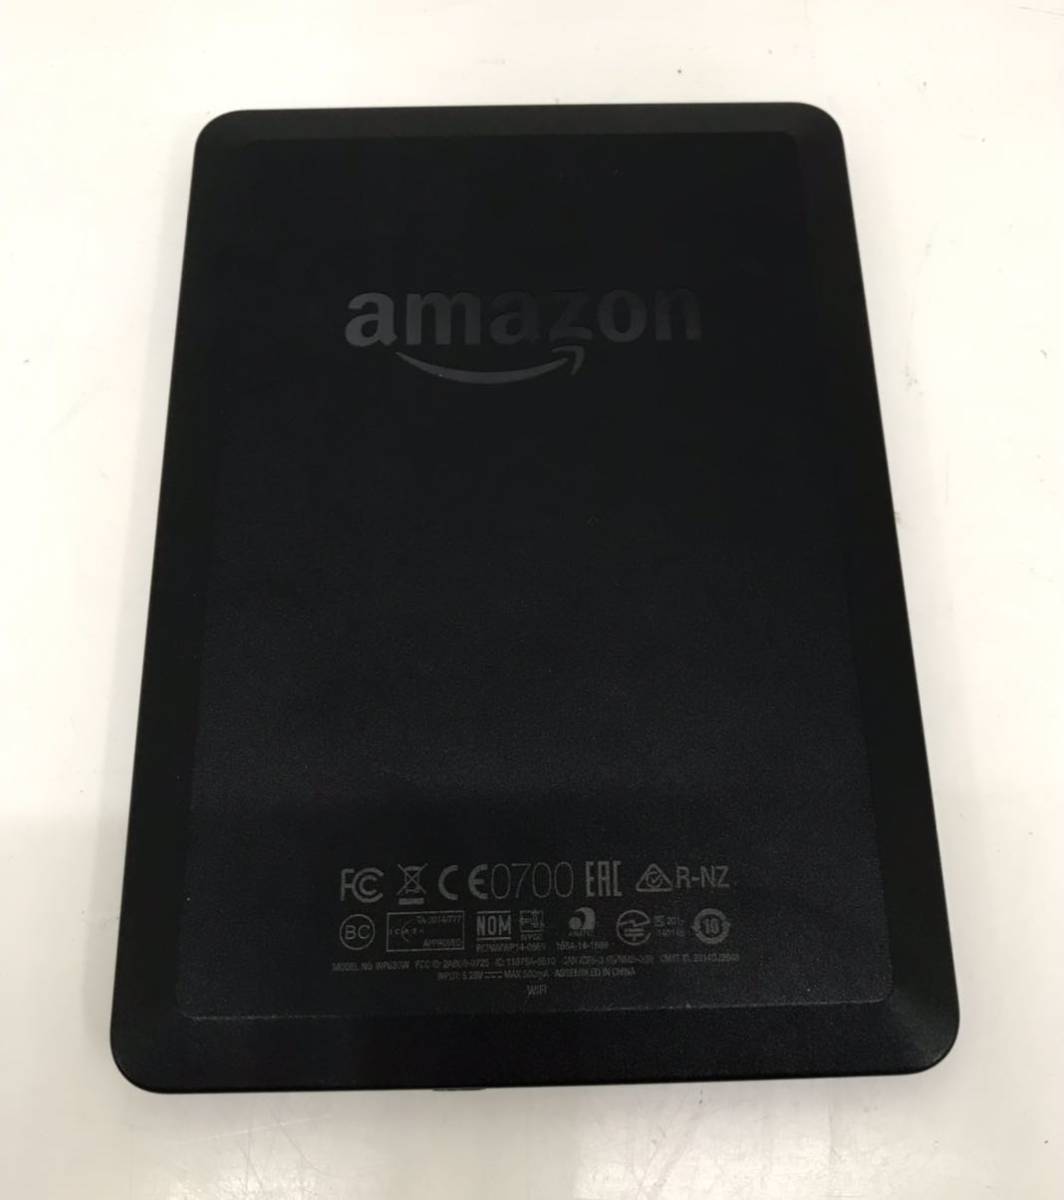 Amazon Kindle WP63GW no. 7 generation advertisement none black E-book Amazon gold dollar 